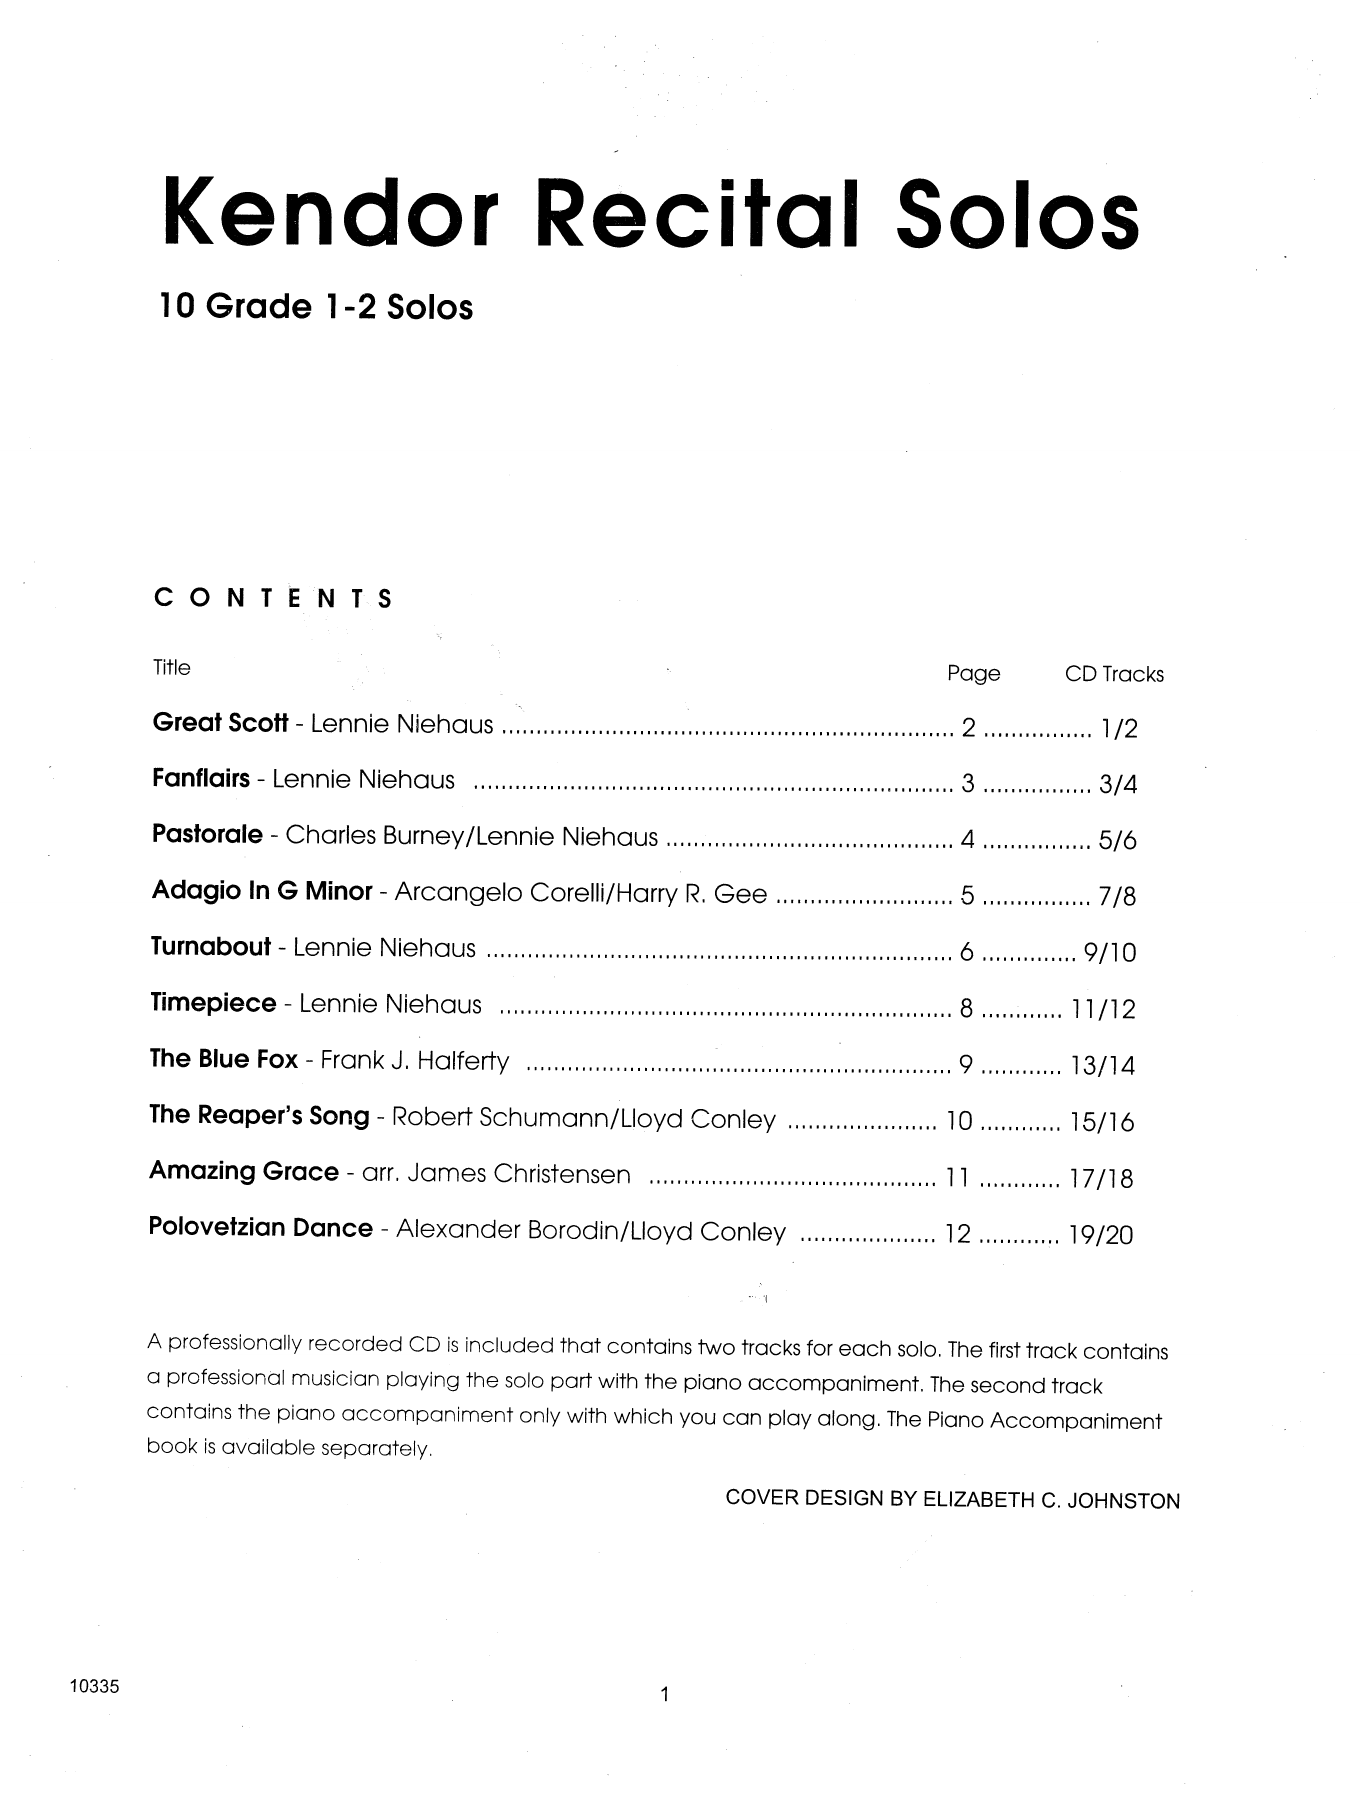 Download Various Kendor Recital Solos - Eb Alto Saxophon Sheet Music